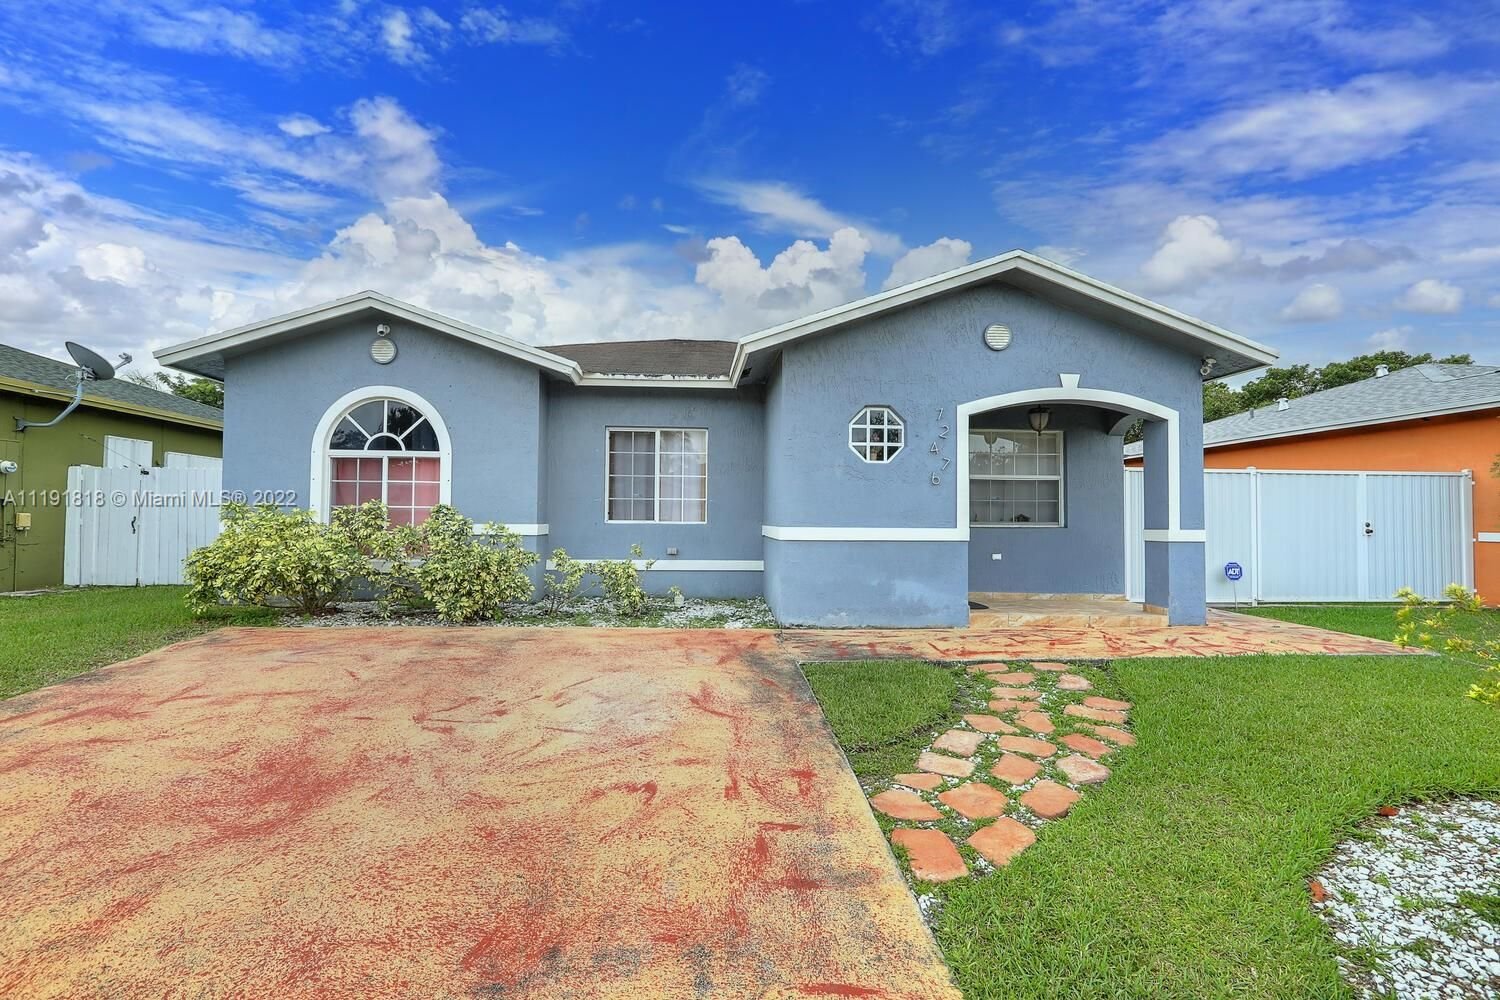 Real estate property located at 12476 198th St, Miami-Dade County, Miami, FL